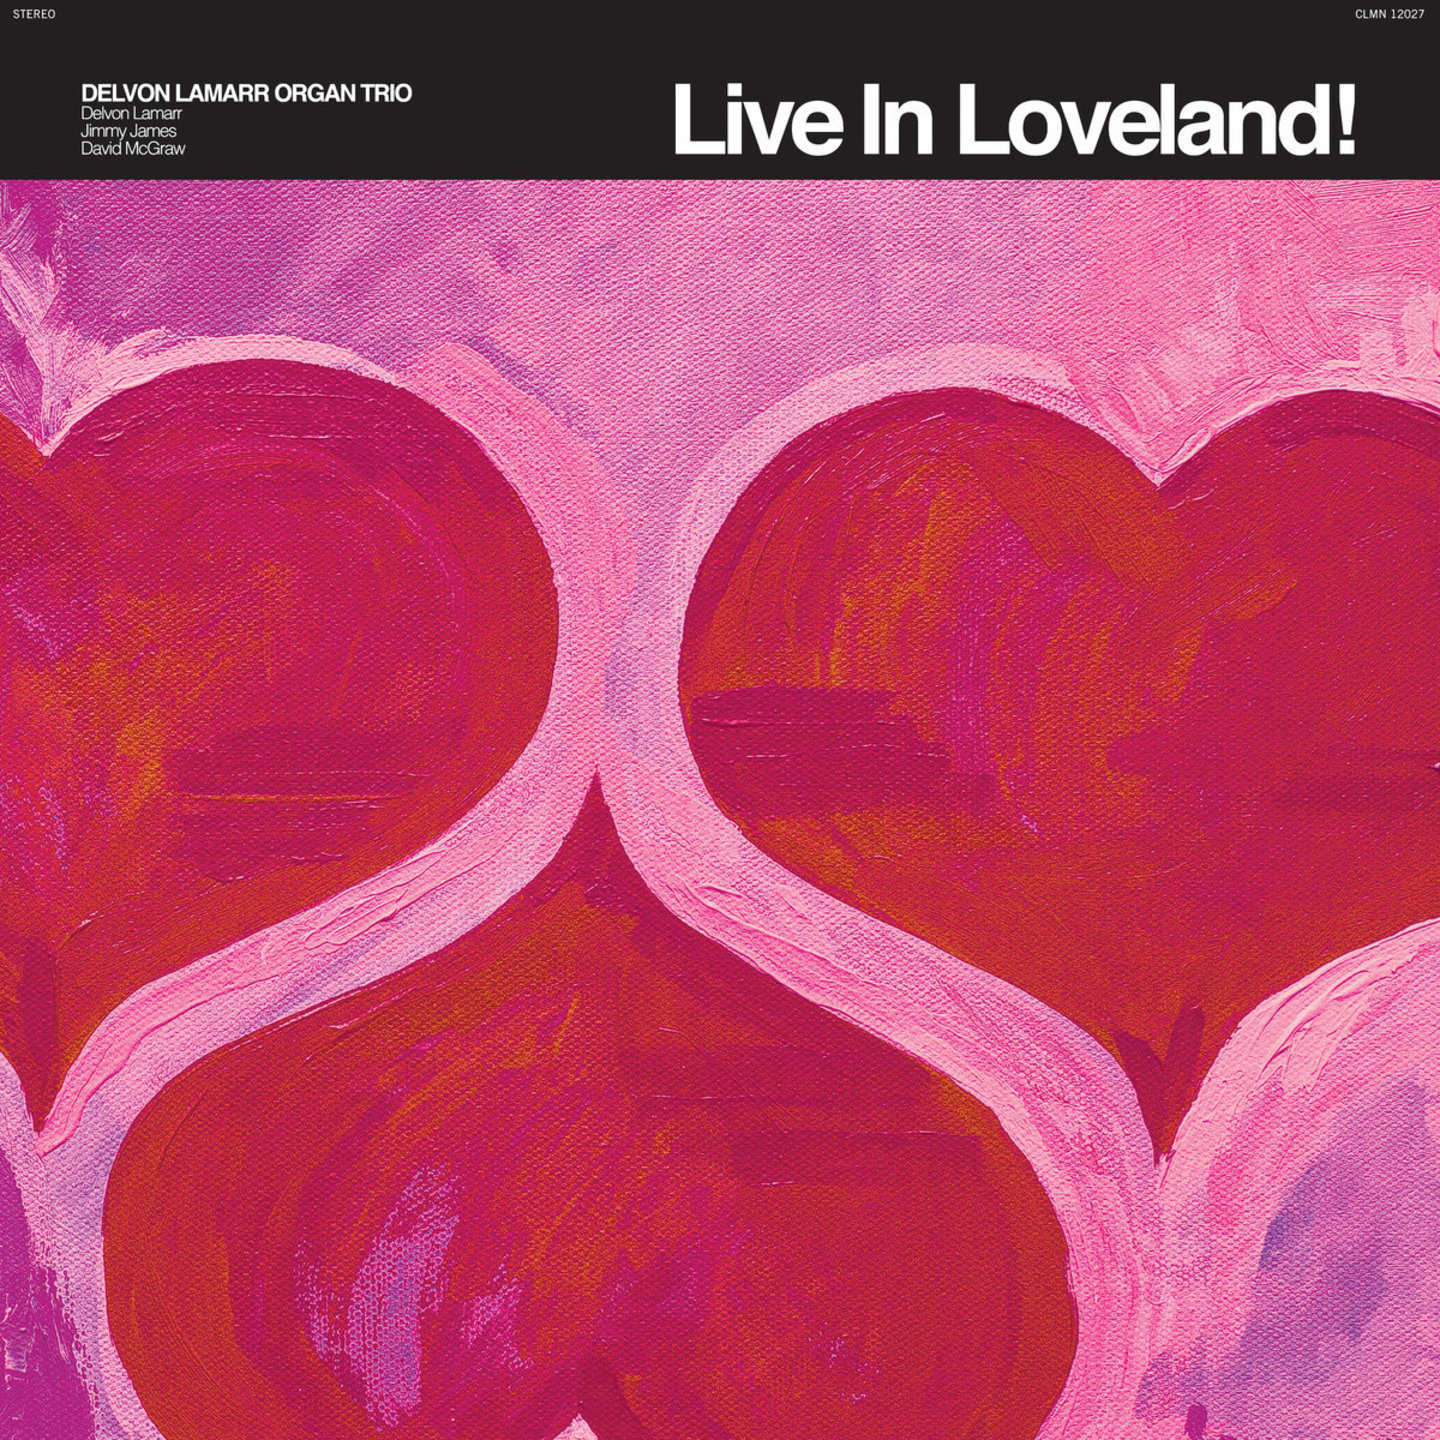 DELVON LAMAR ORGAN TRIO - Live in Loveland! 2xLP (RSD 2022 Exclusive, Colour vinyl)